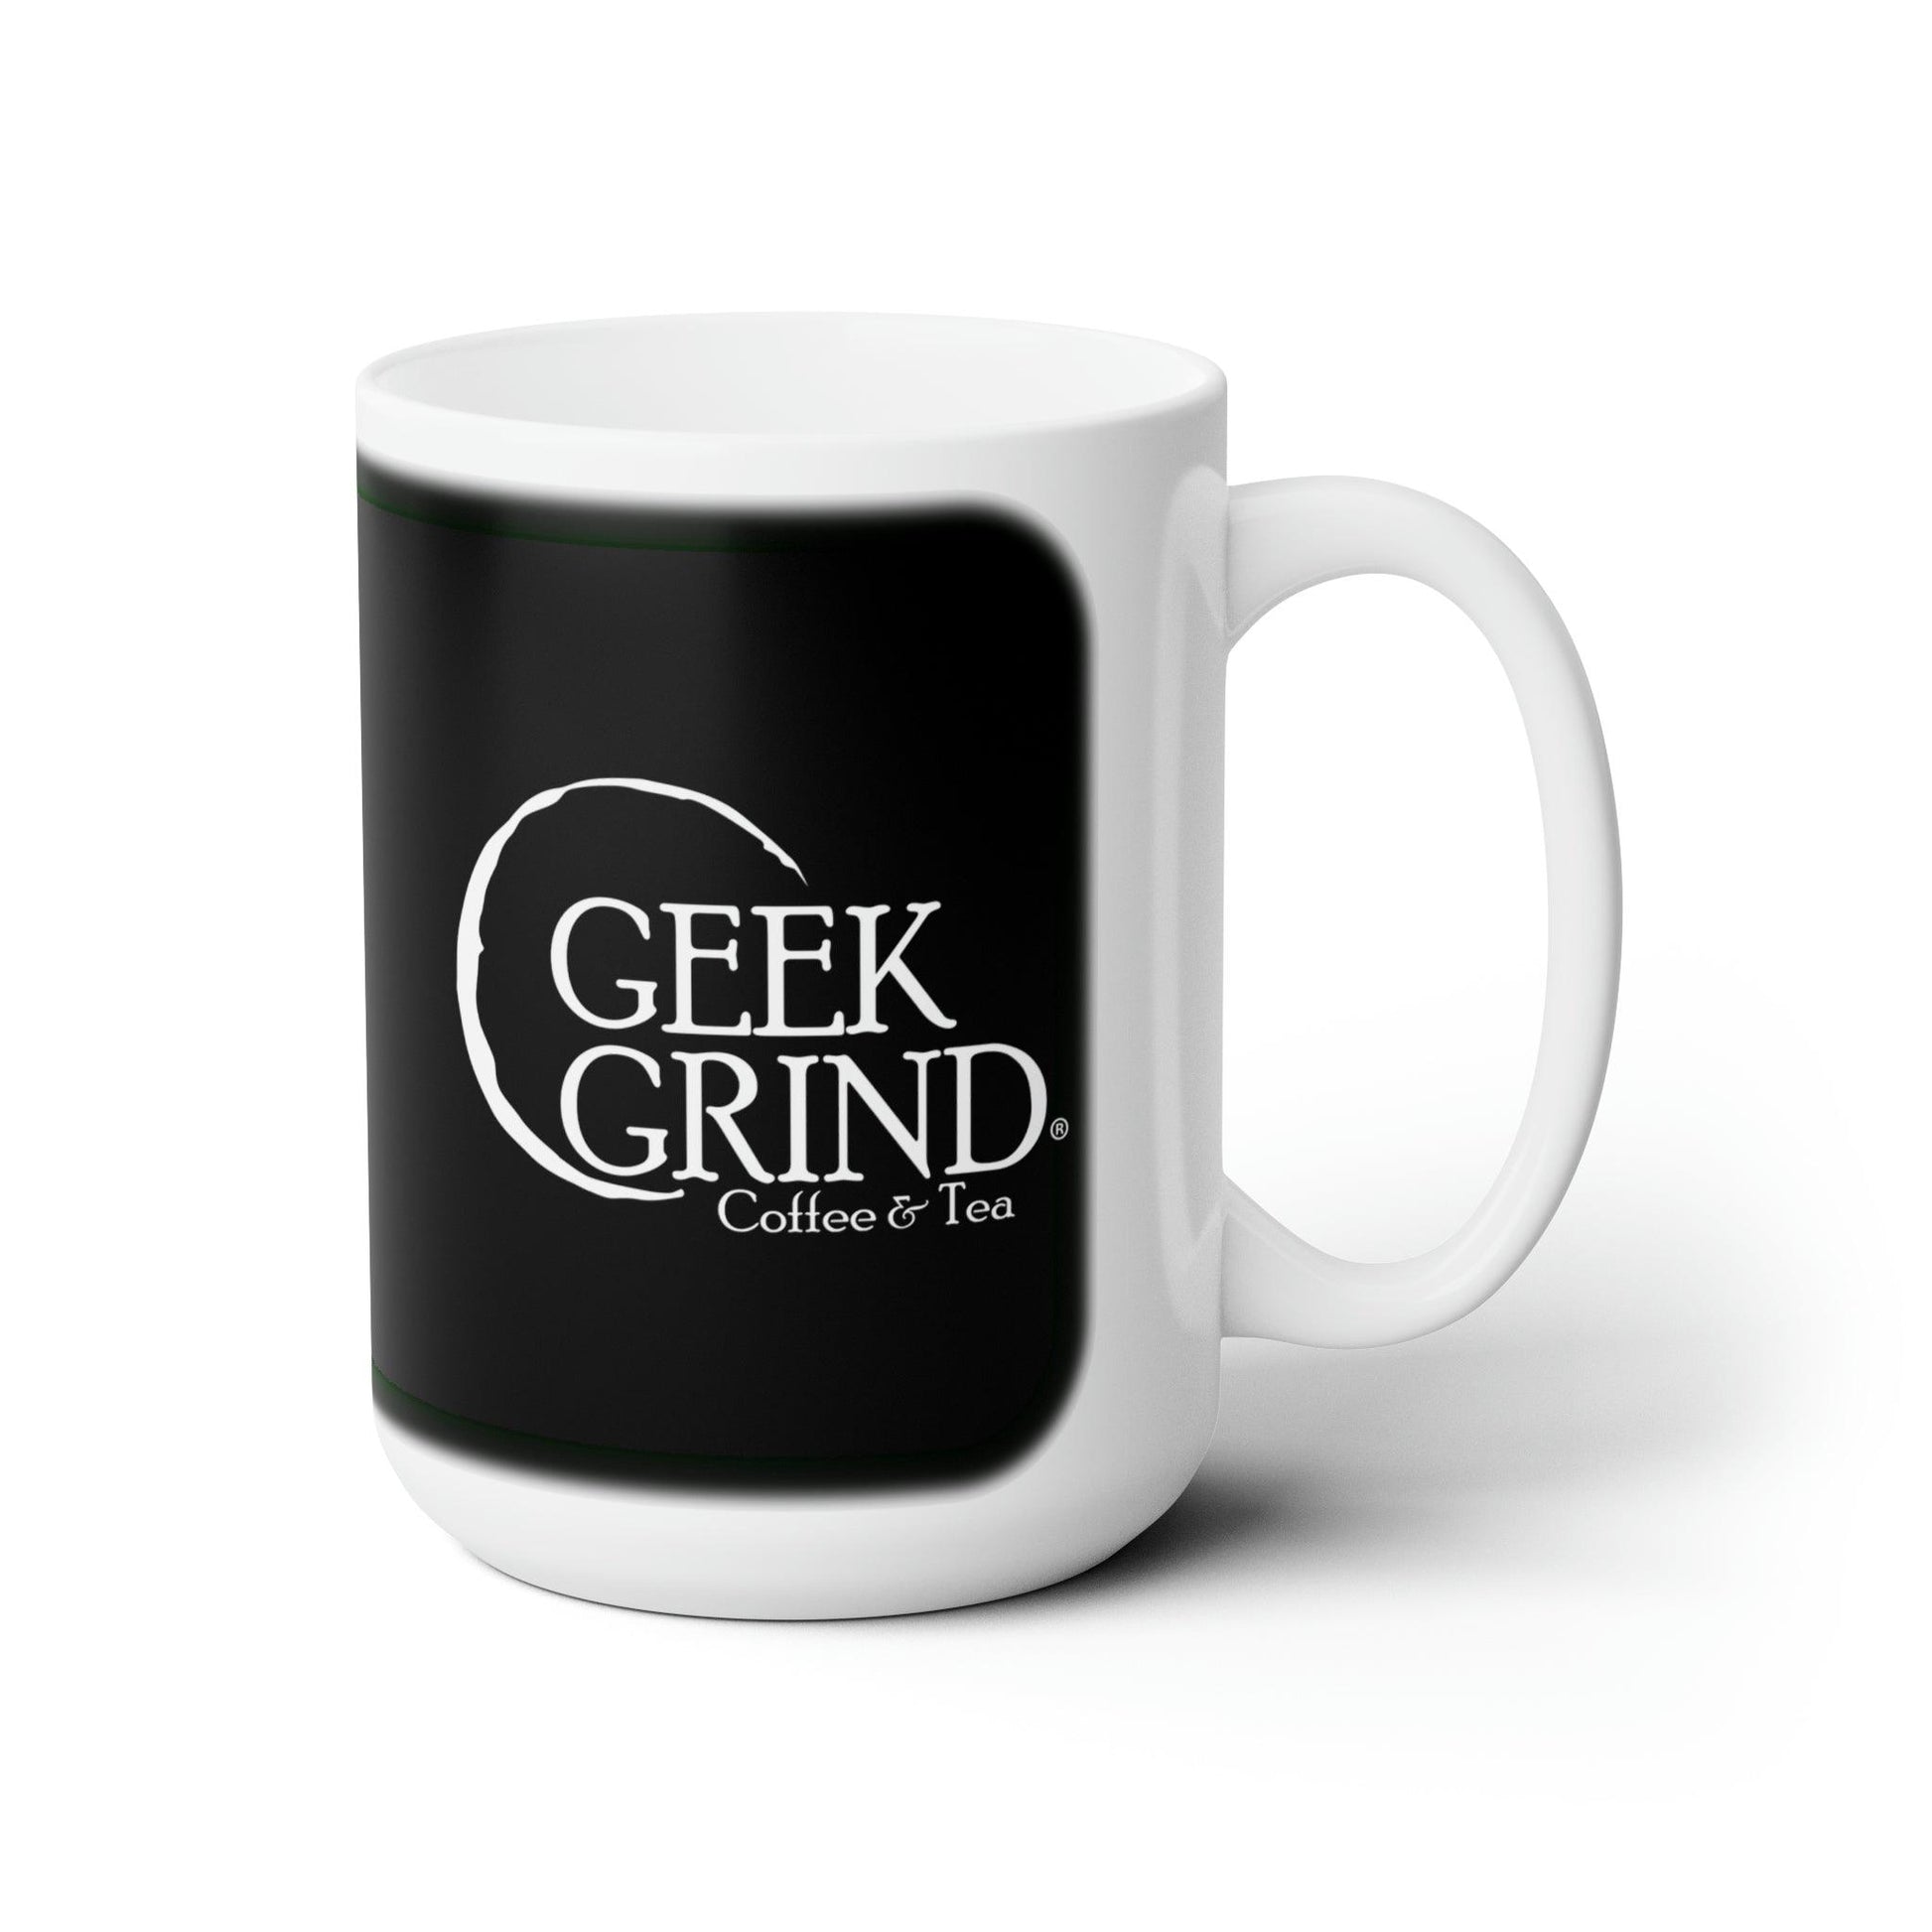 Witch's Cider Mug - Geek Grind Coffee